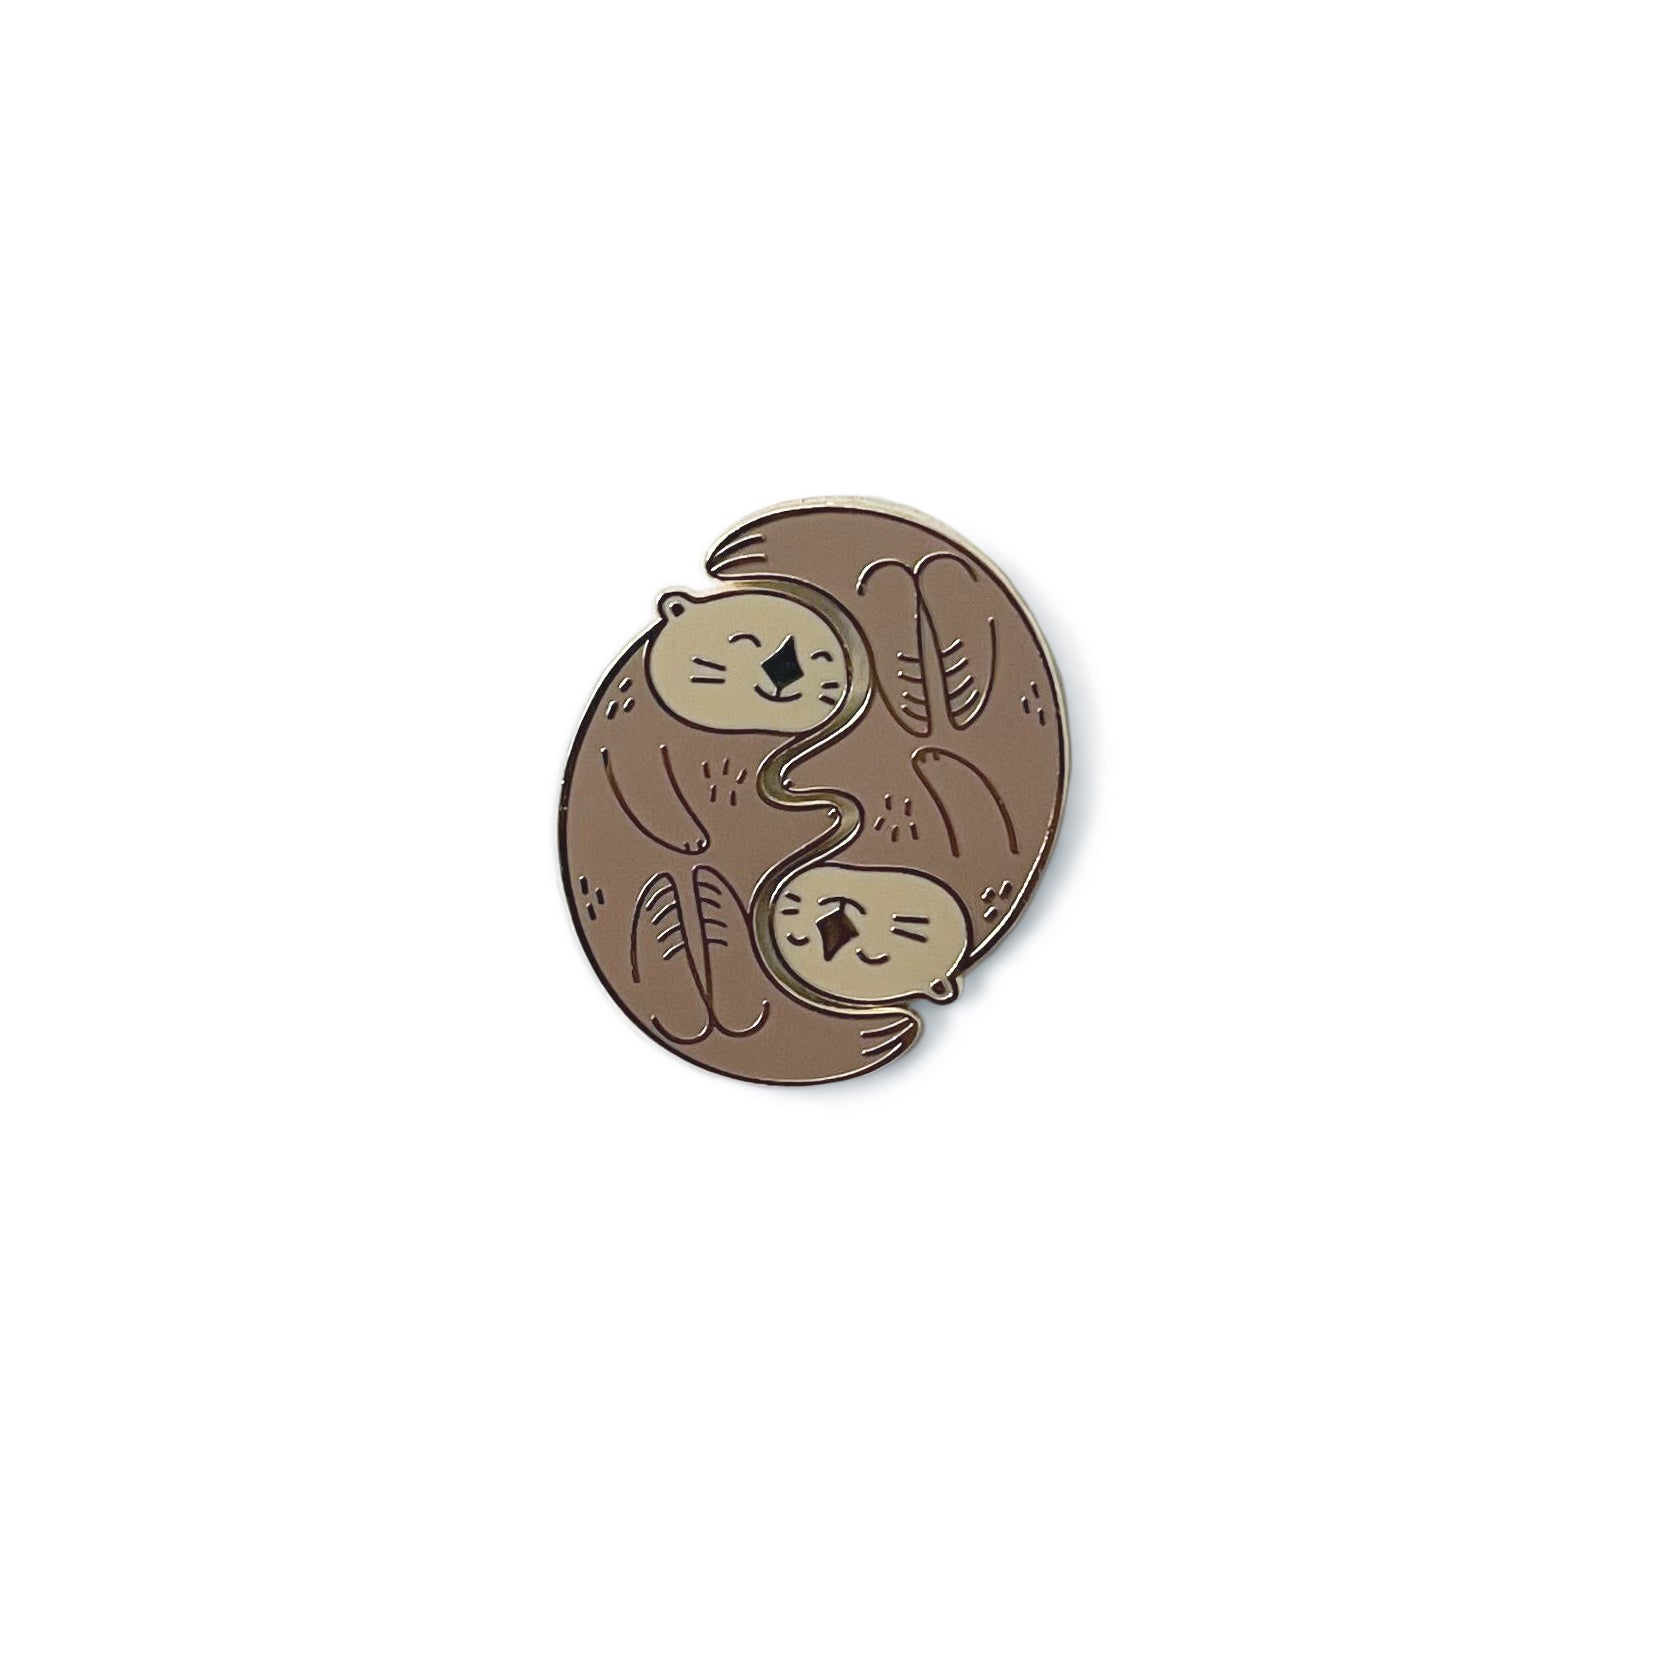 Vidra / Otter pin set